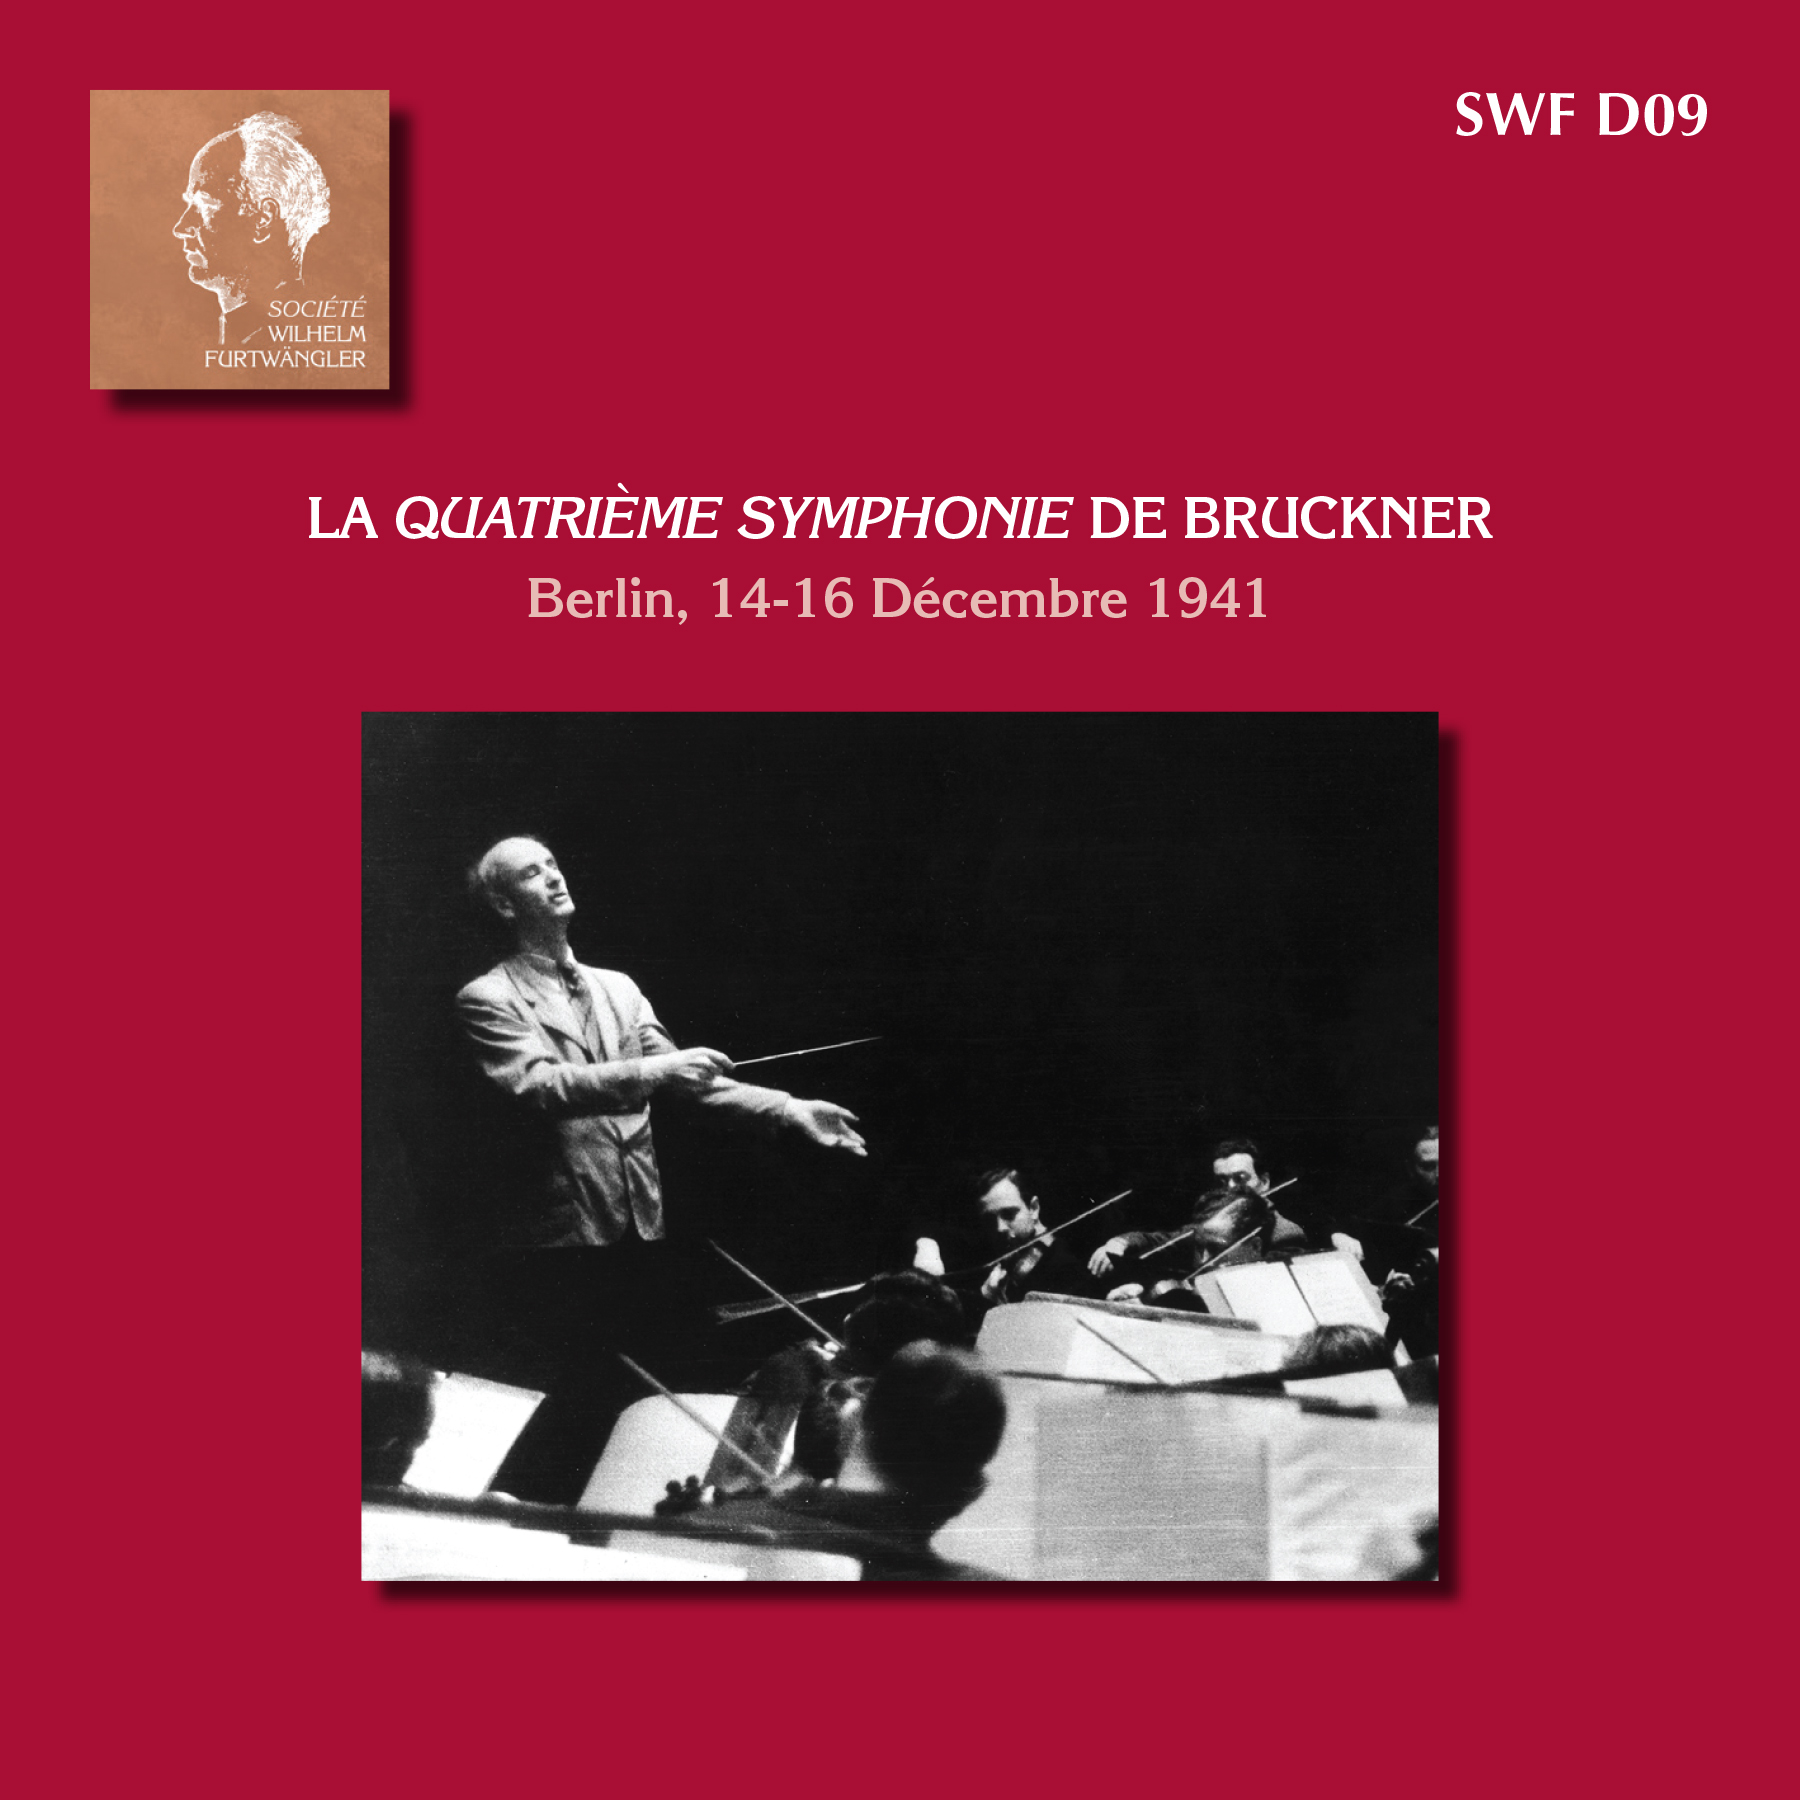 Wilhelm　SWF　D09　Bruckner's　No.　–　Société　–　–　1941　Symphony　Furtwängler